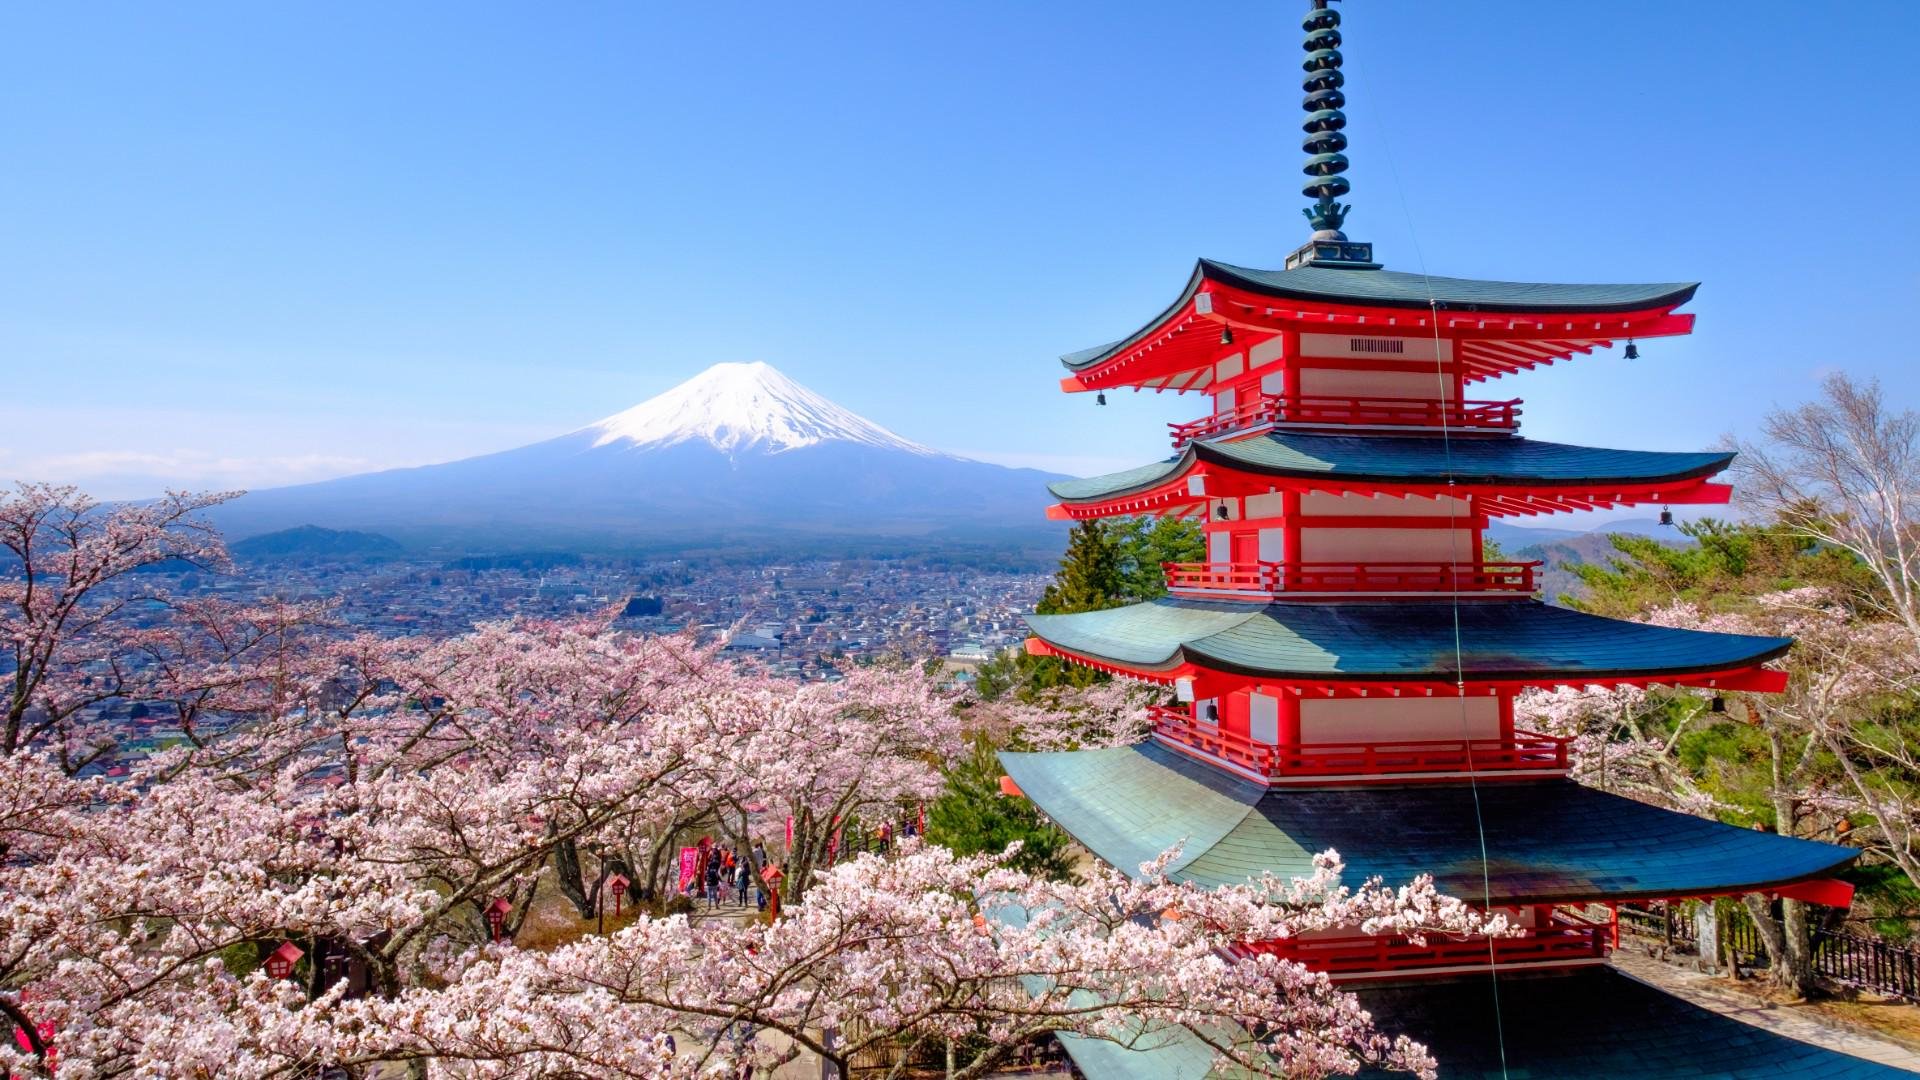 japan tourism reopen 2022